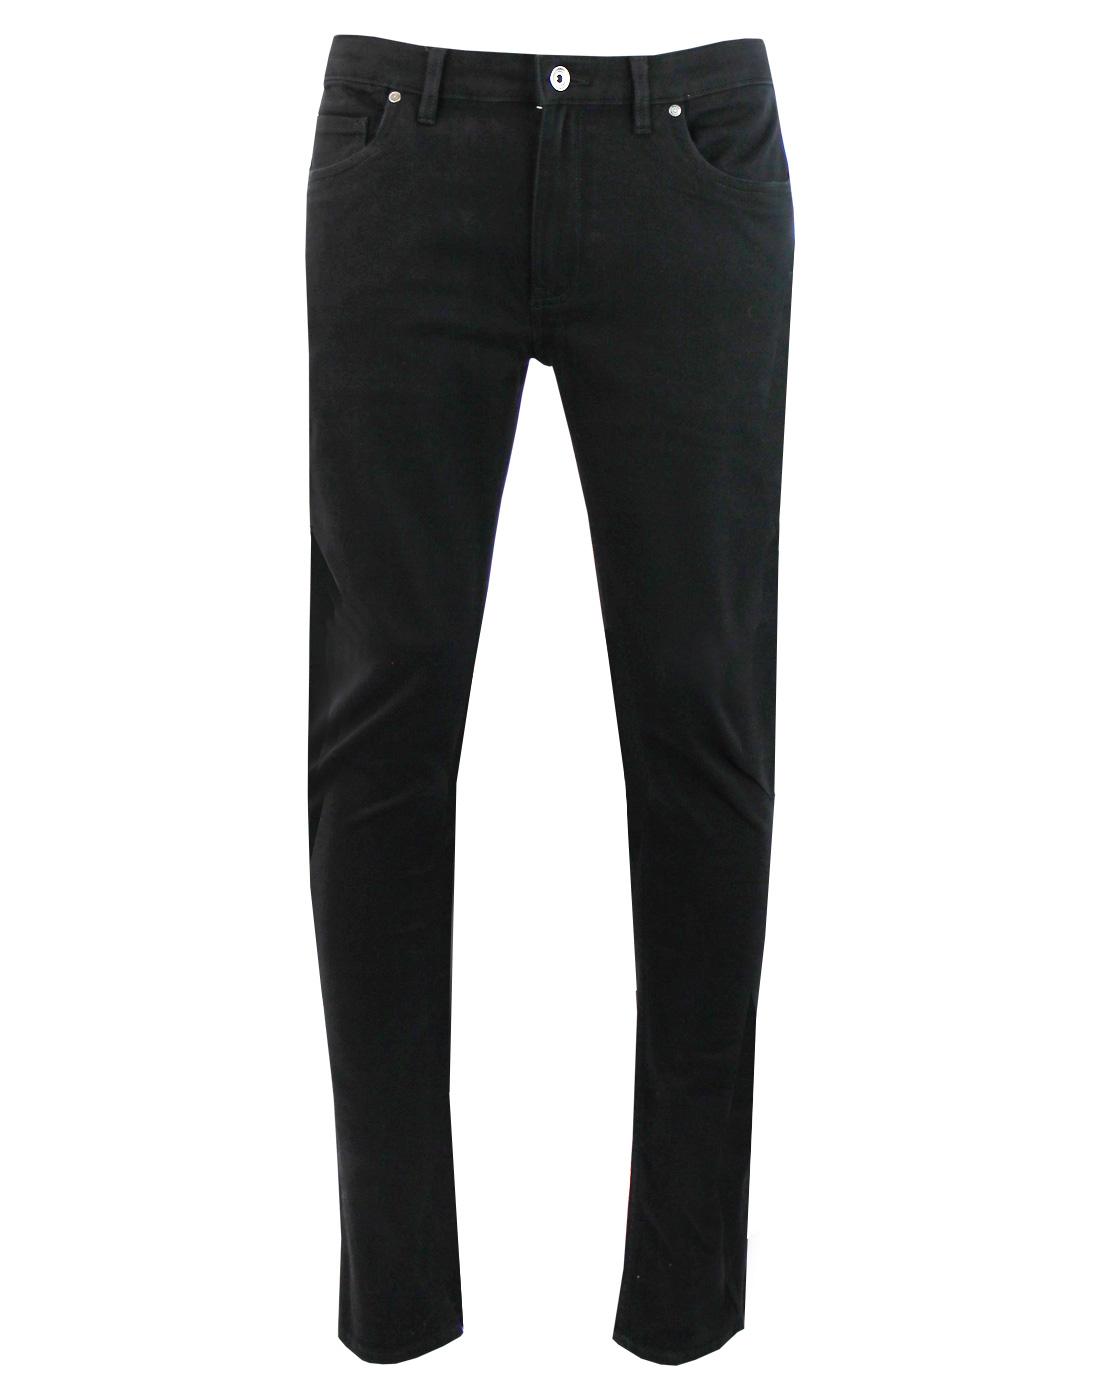 FARAH Drake Retro 60s Mod 5 Pocket Slim Twill Trousers in Black